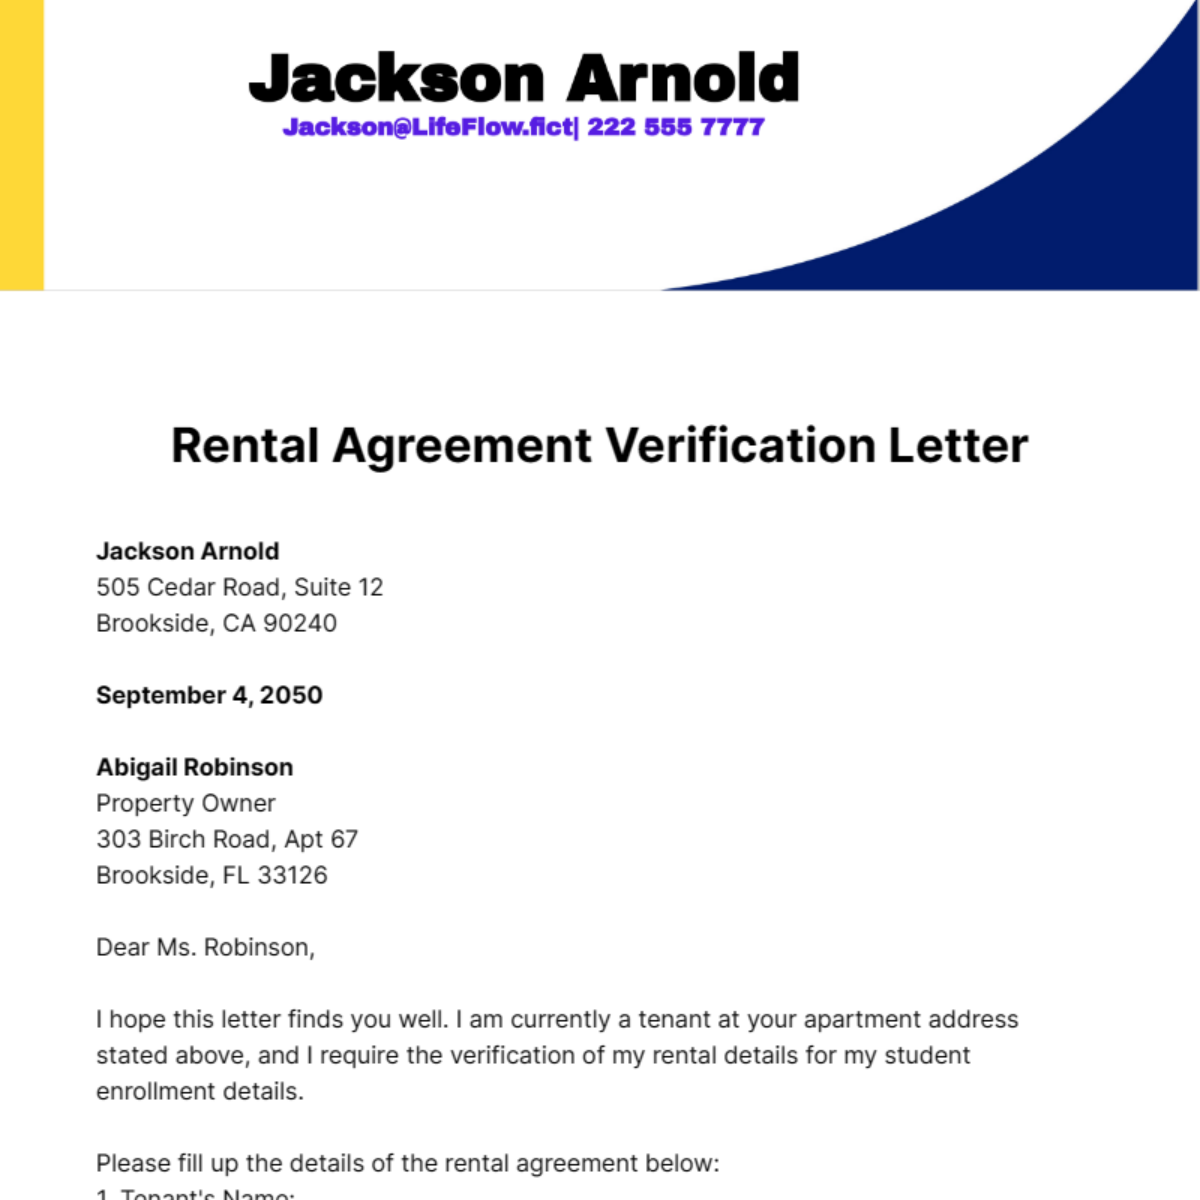 Free Rental Agreement Verification Letter Template